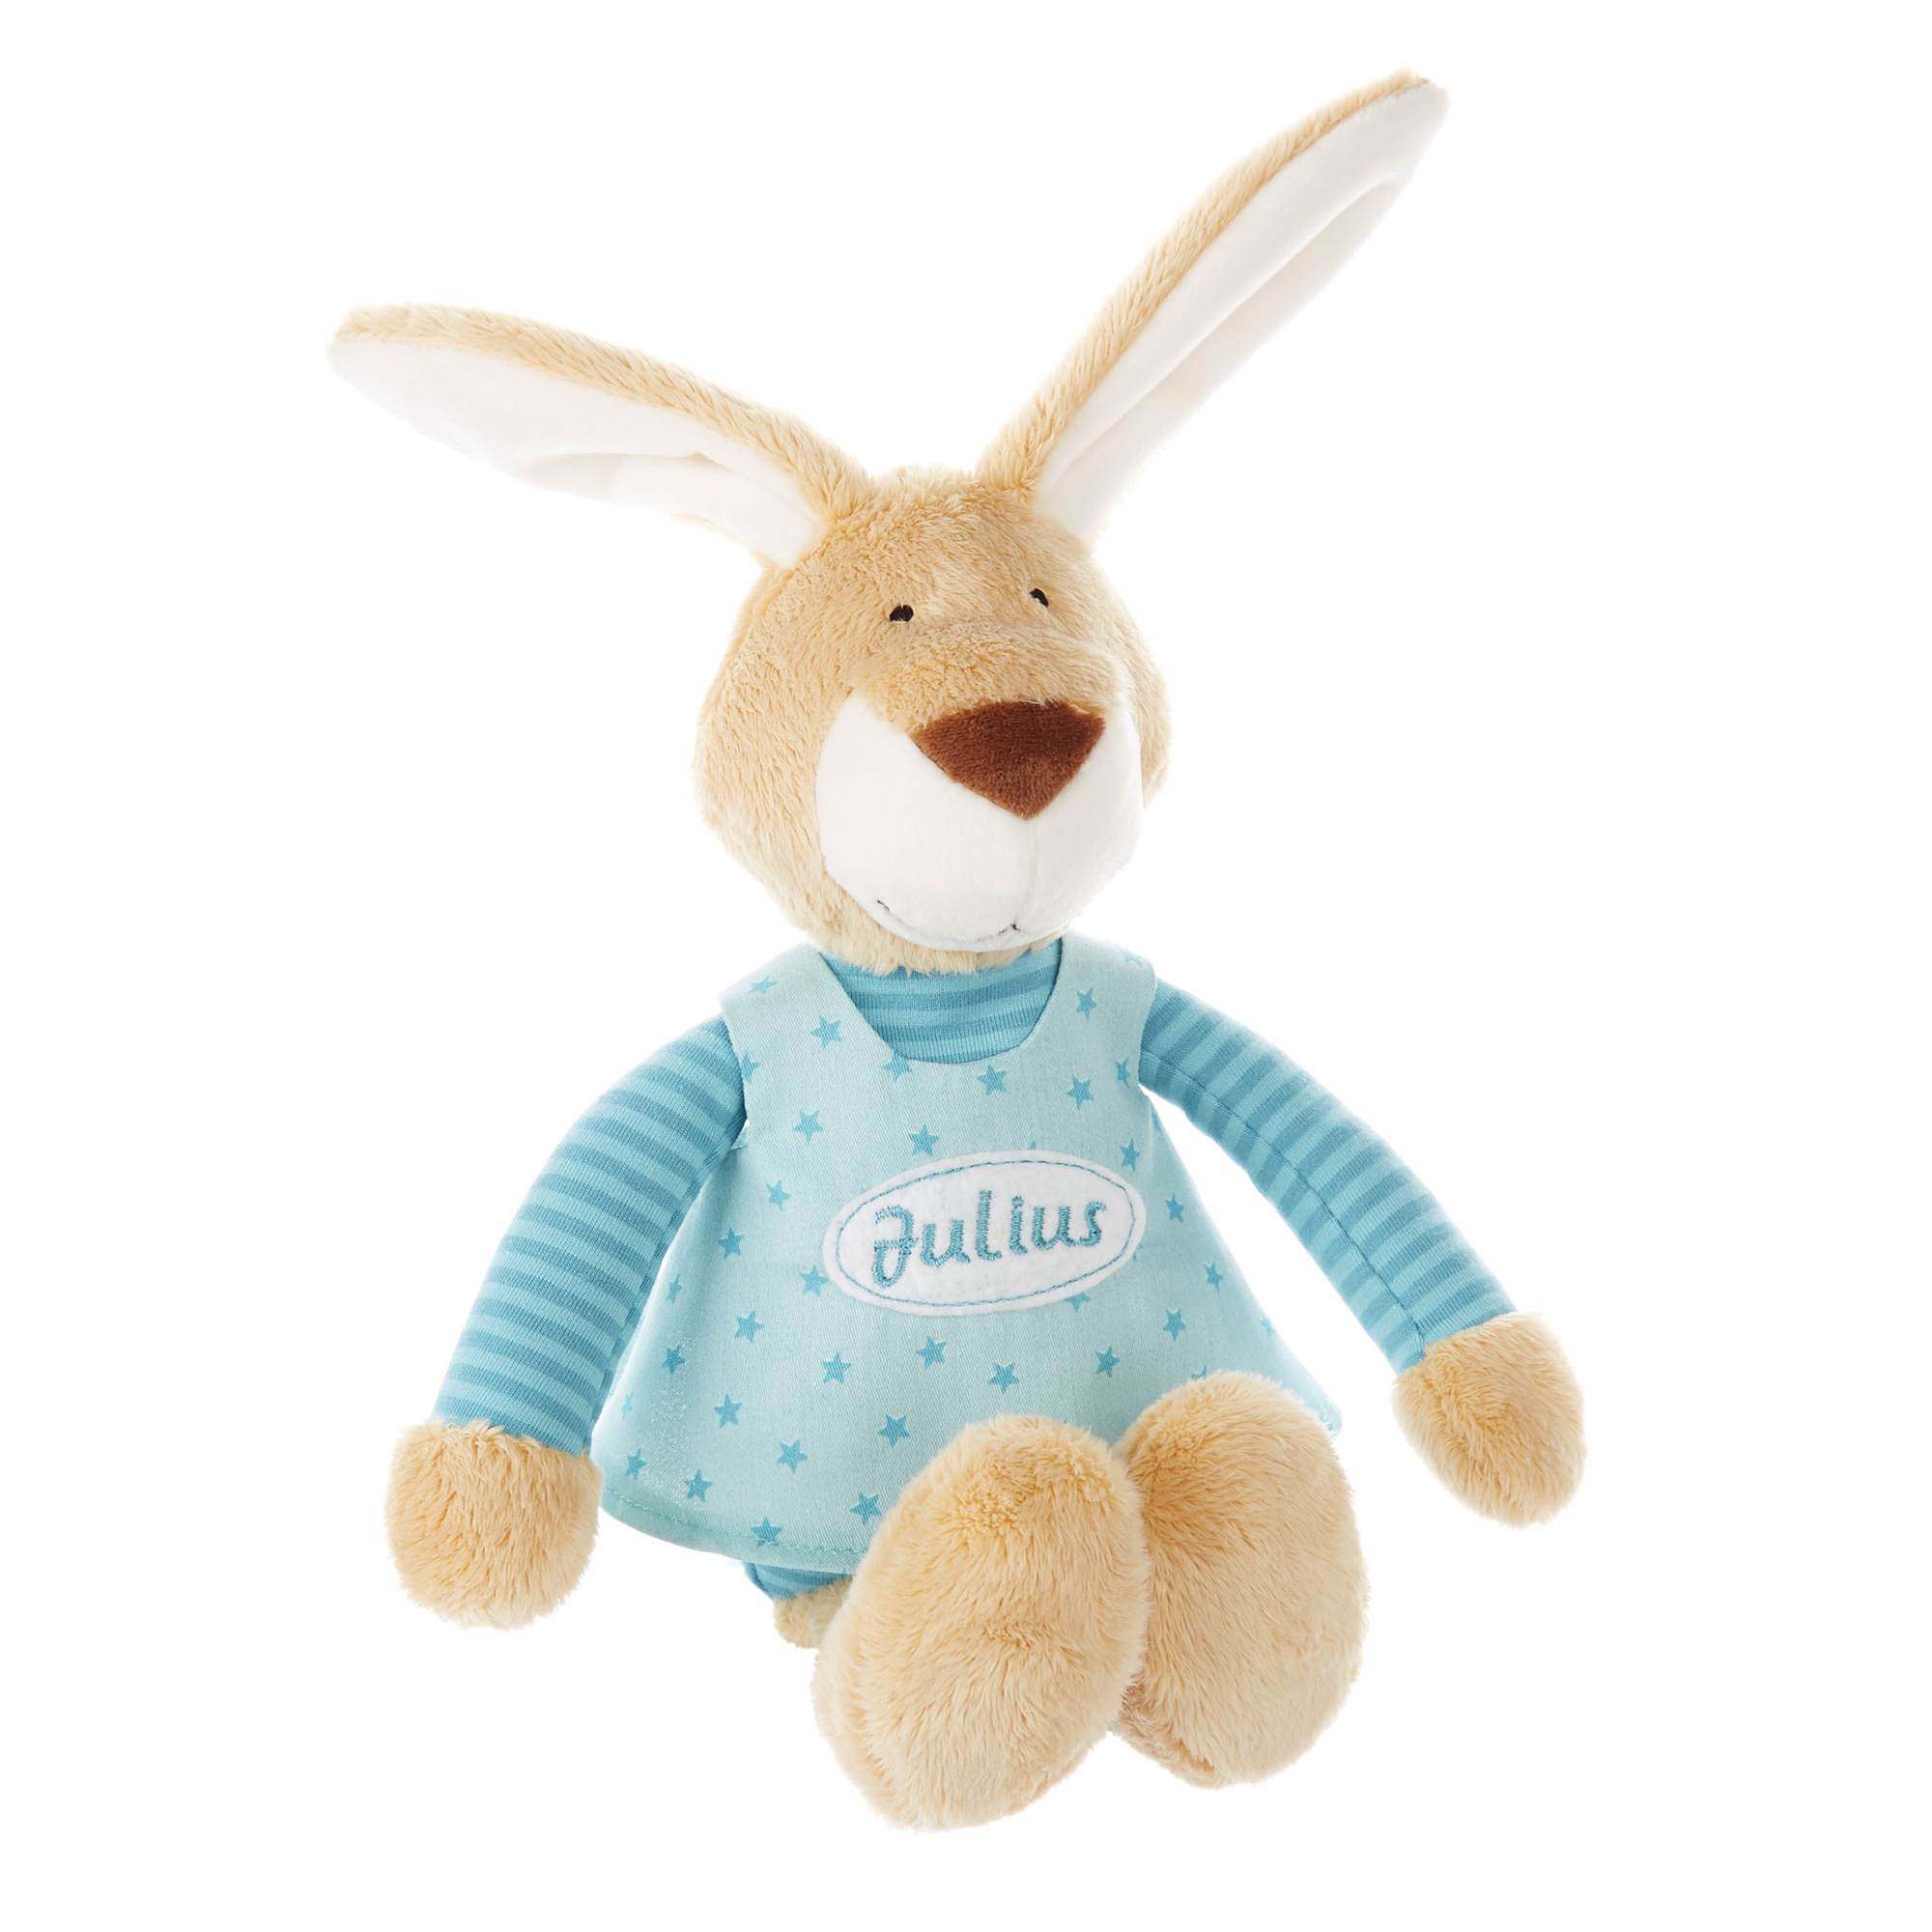 Customised soft toy bunny, blue